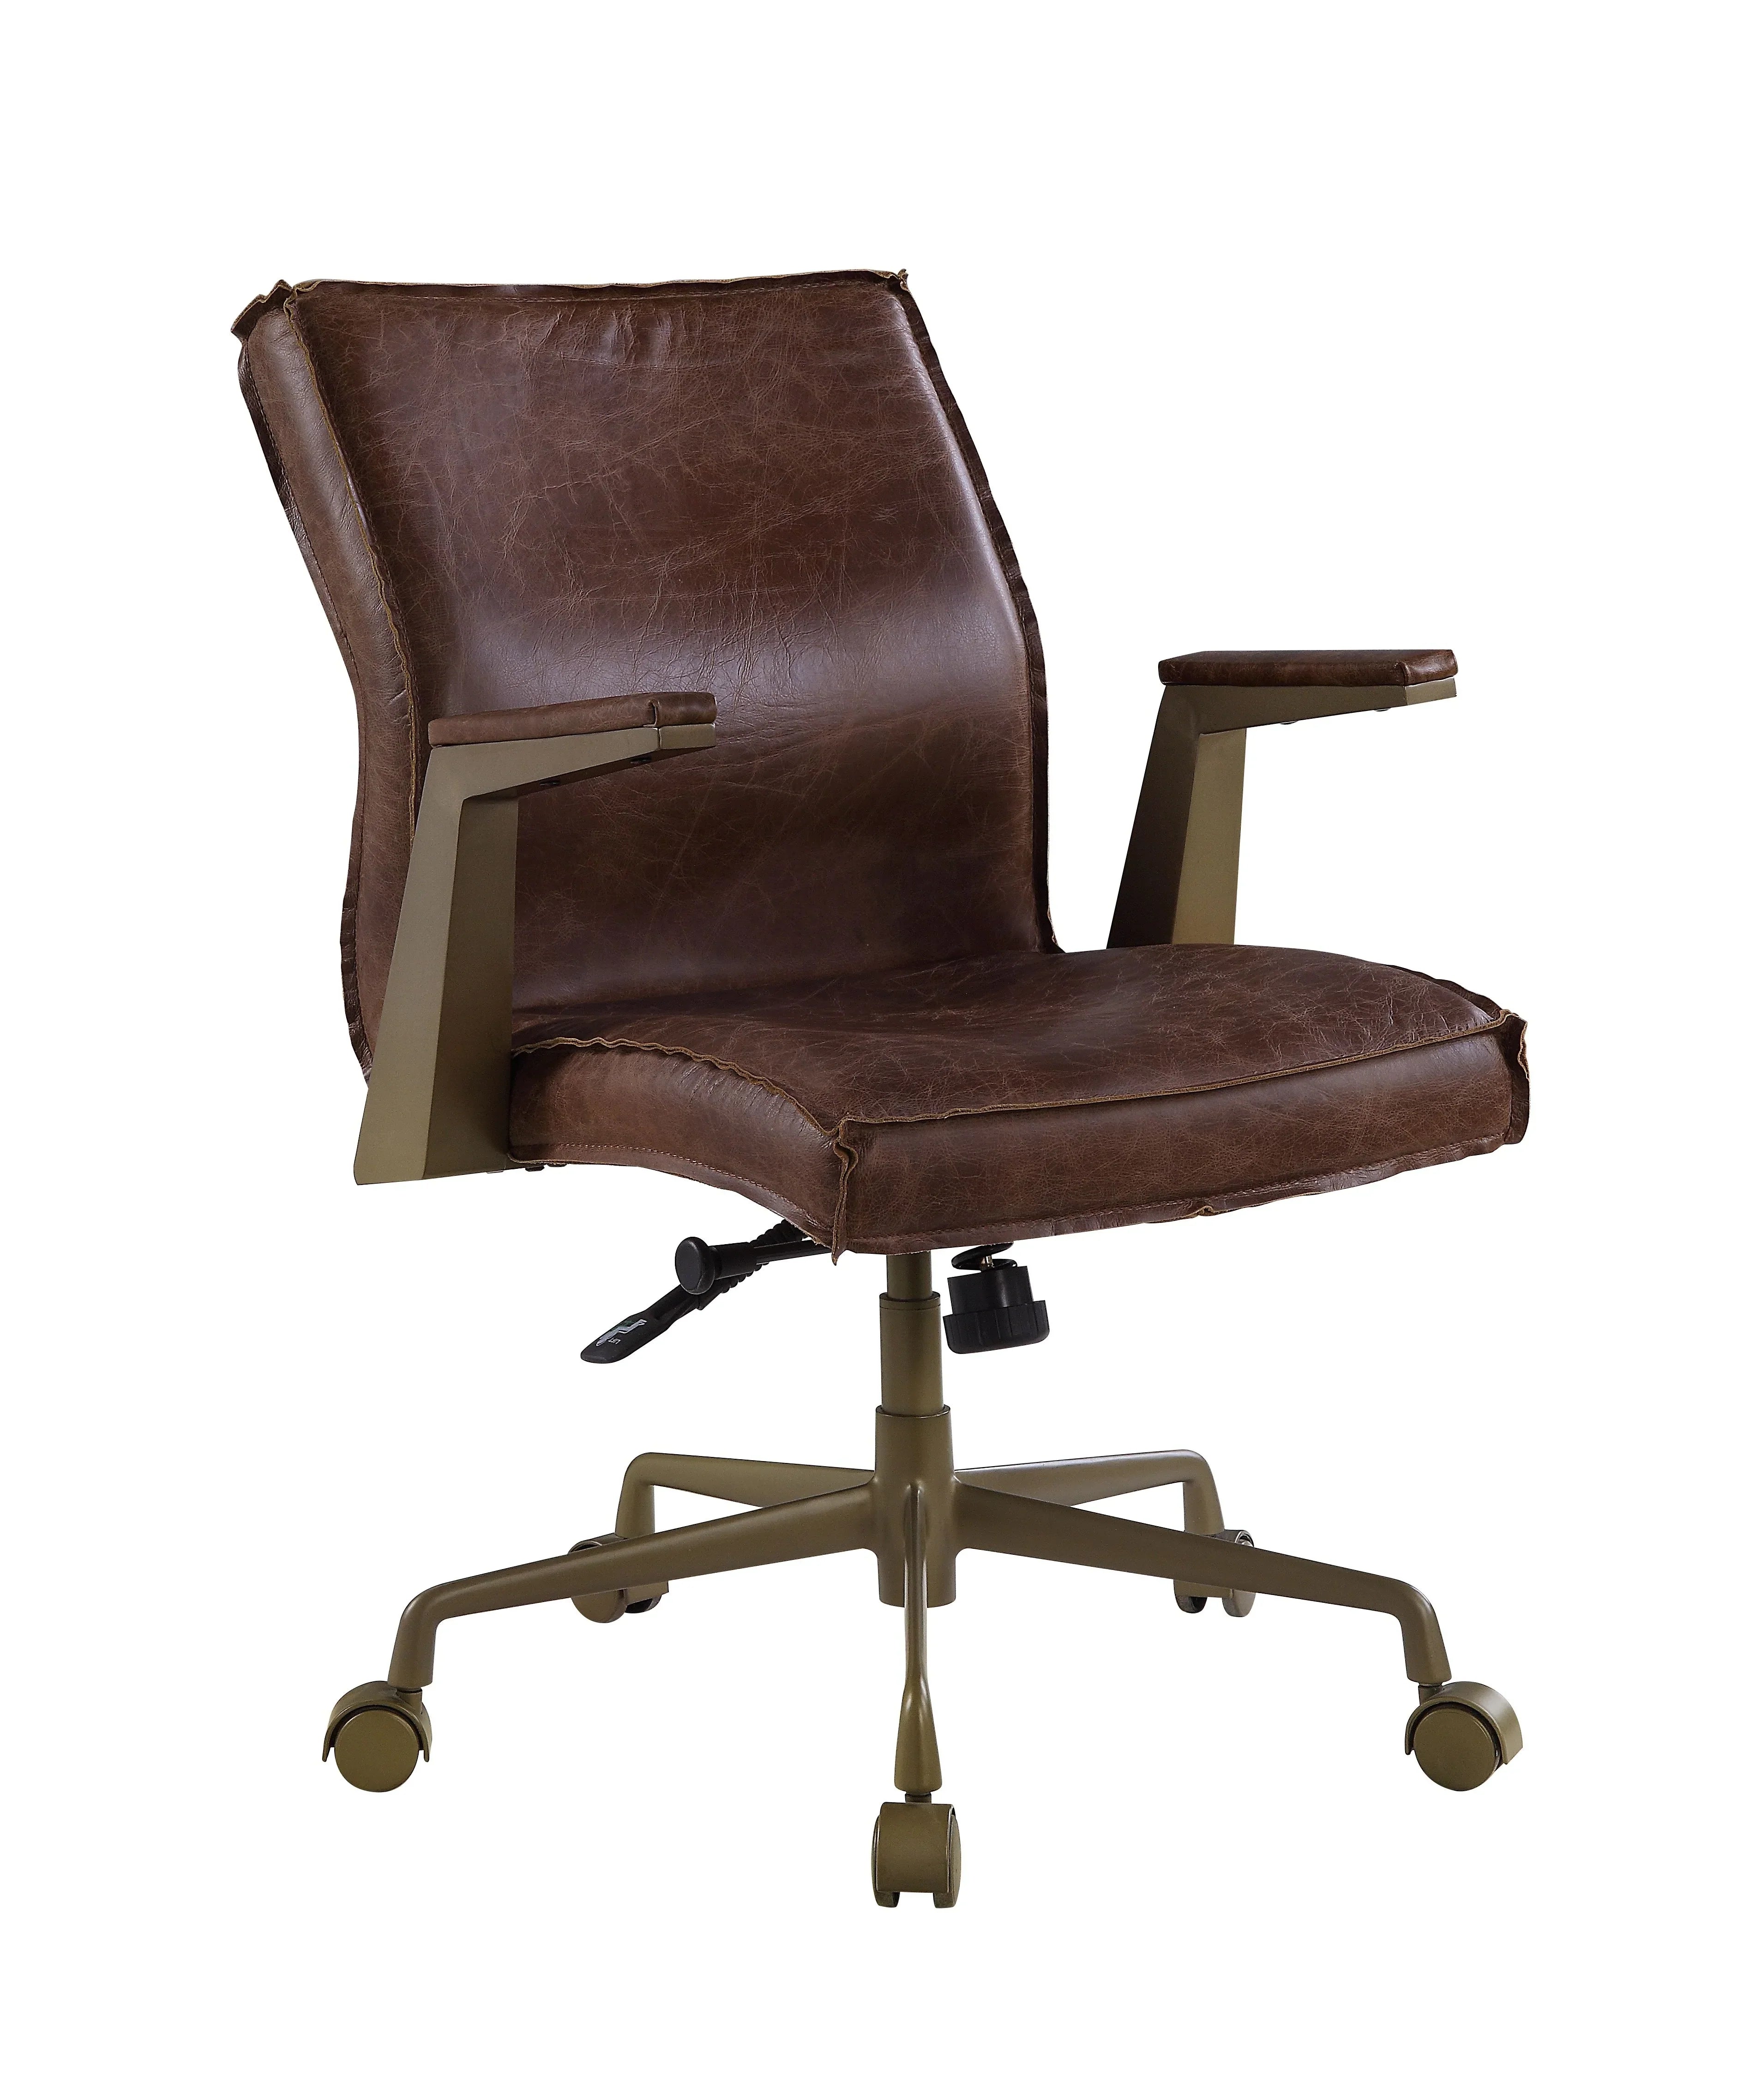 Attica Espresso Top Grain Leather Executive Office Chair Model 92483 By ACME Furniture